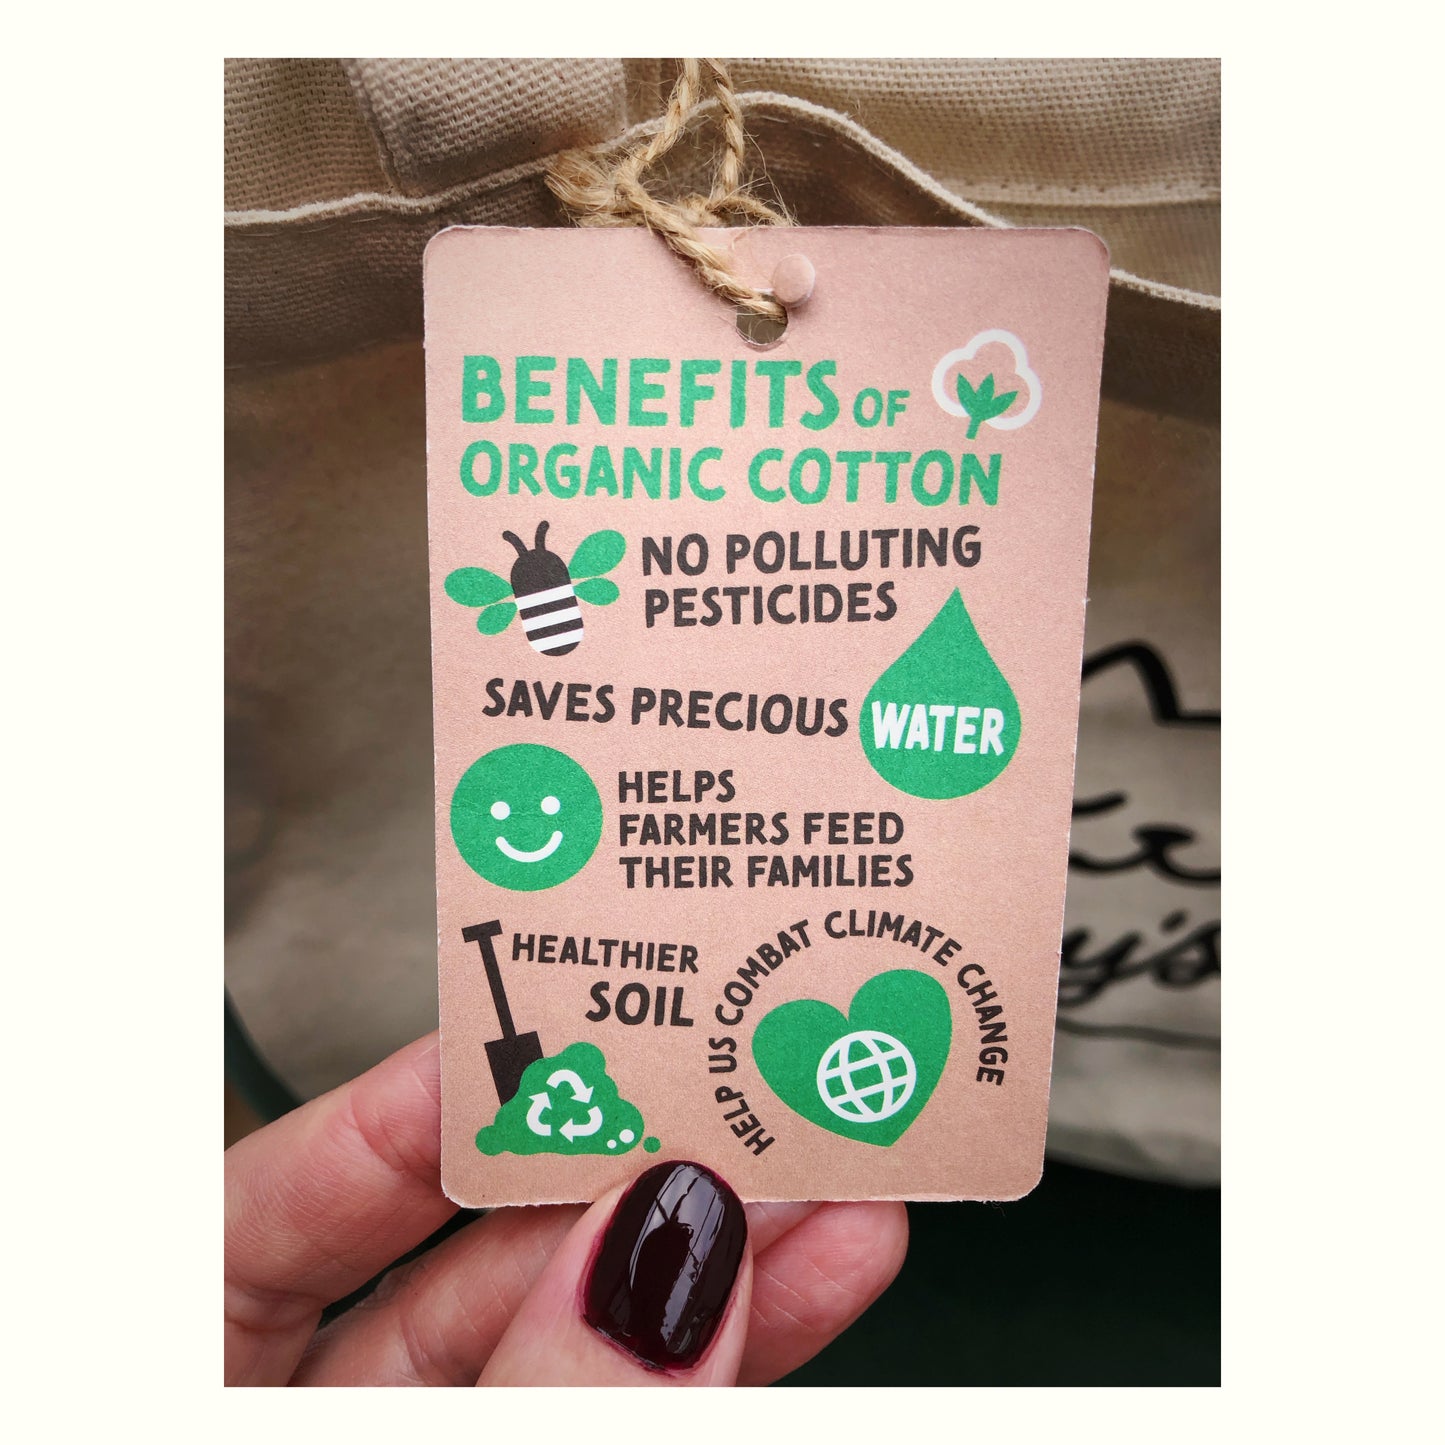 Maisy's Logo Organic Tote Bag